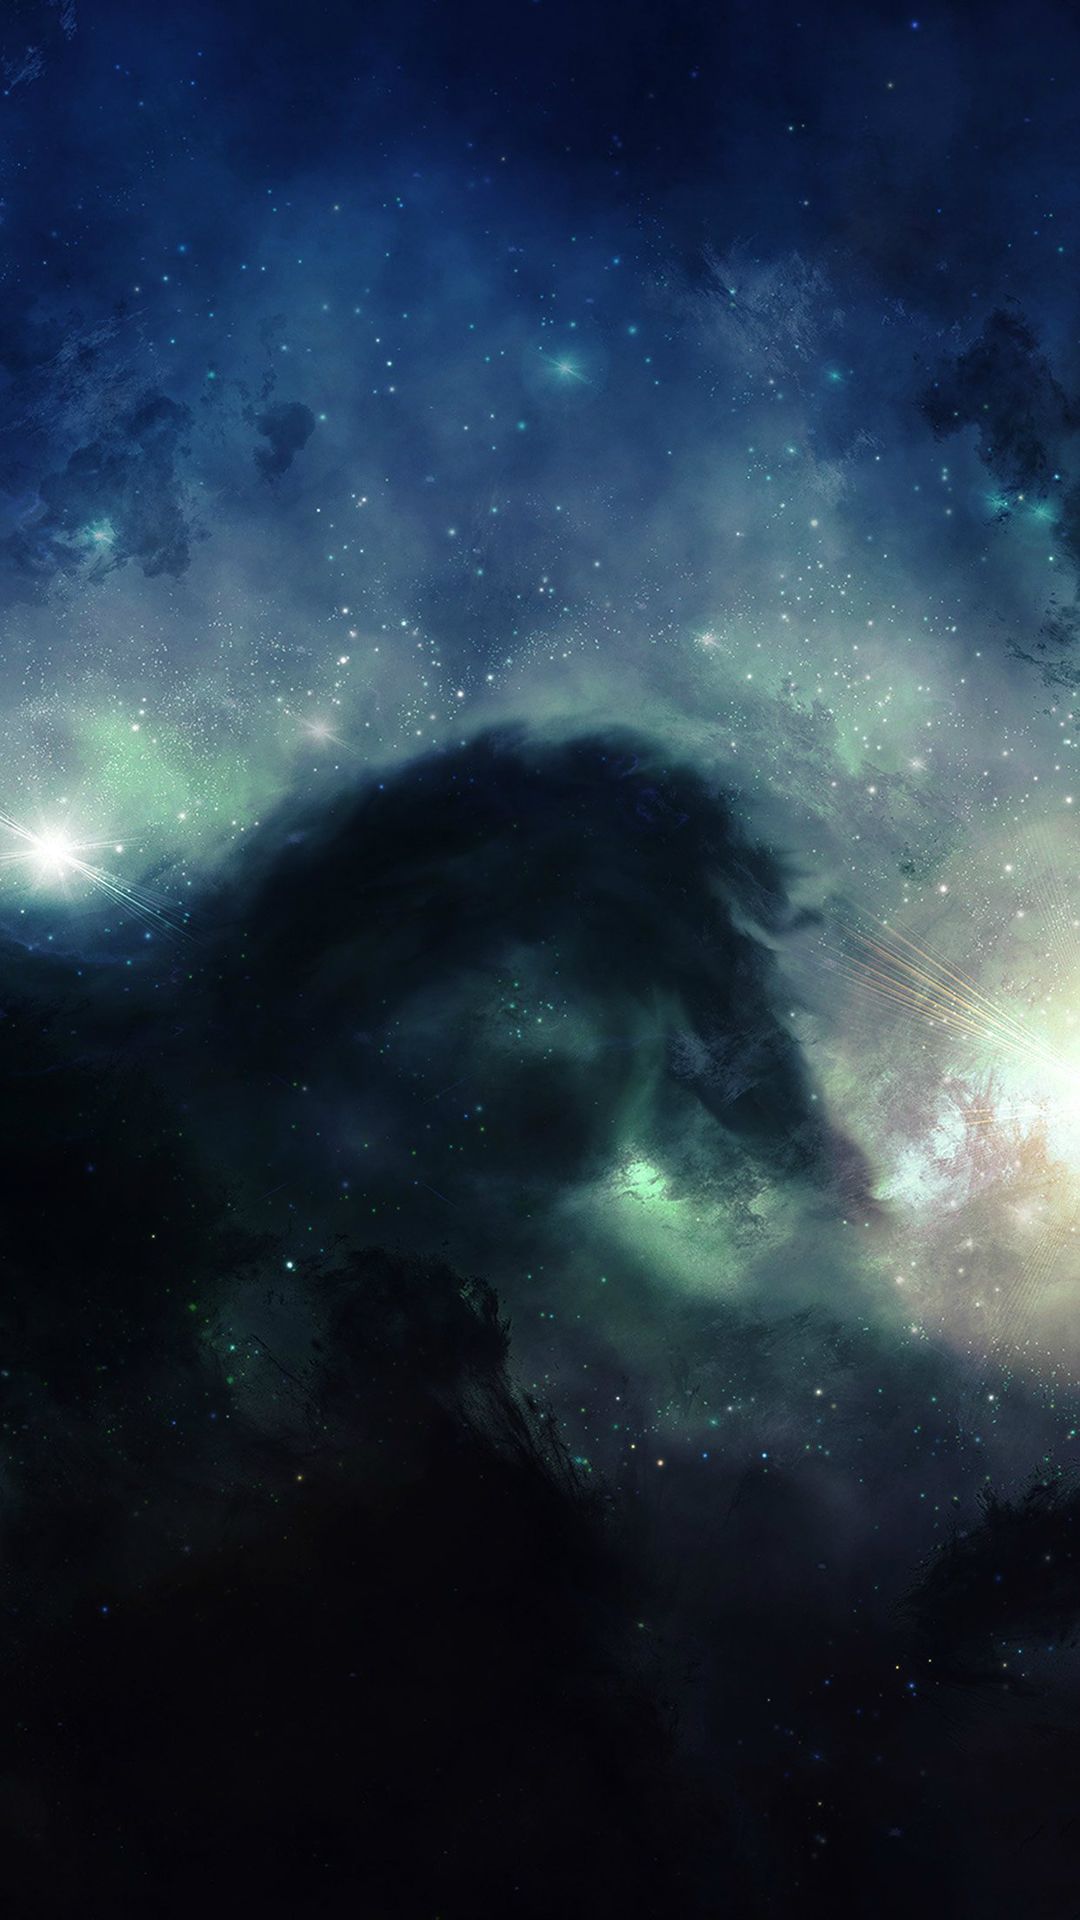 Illuminating Space Blue Star Galaxy Art iPhone 8 Wallpaper Free